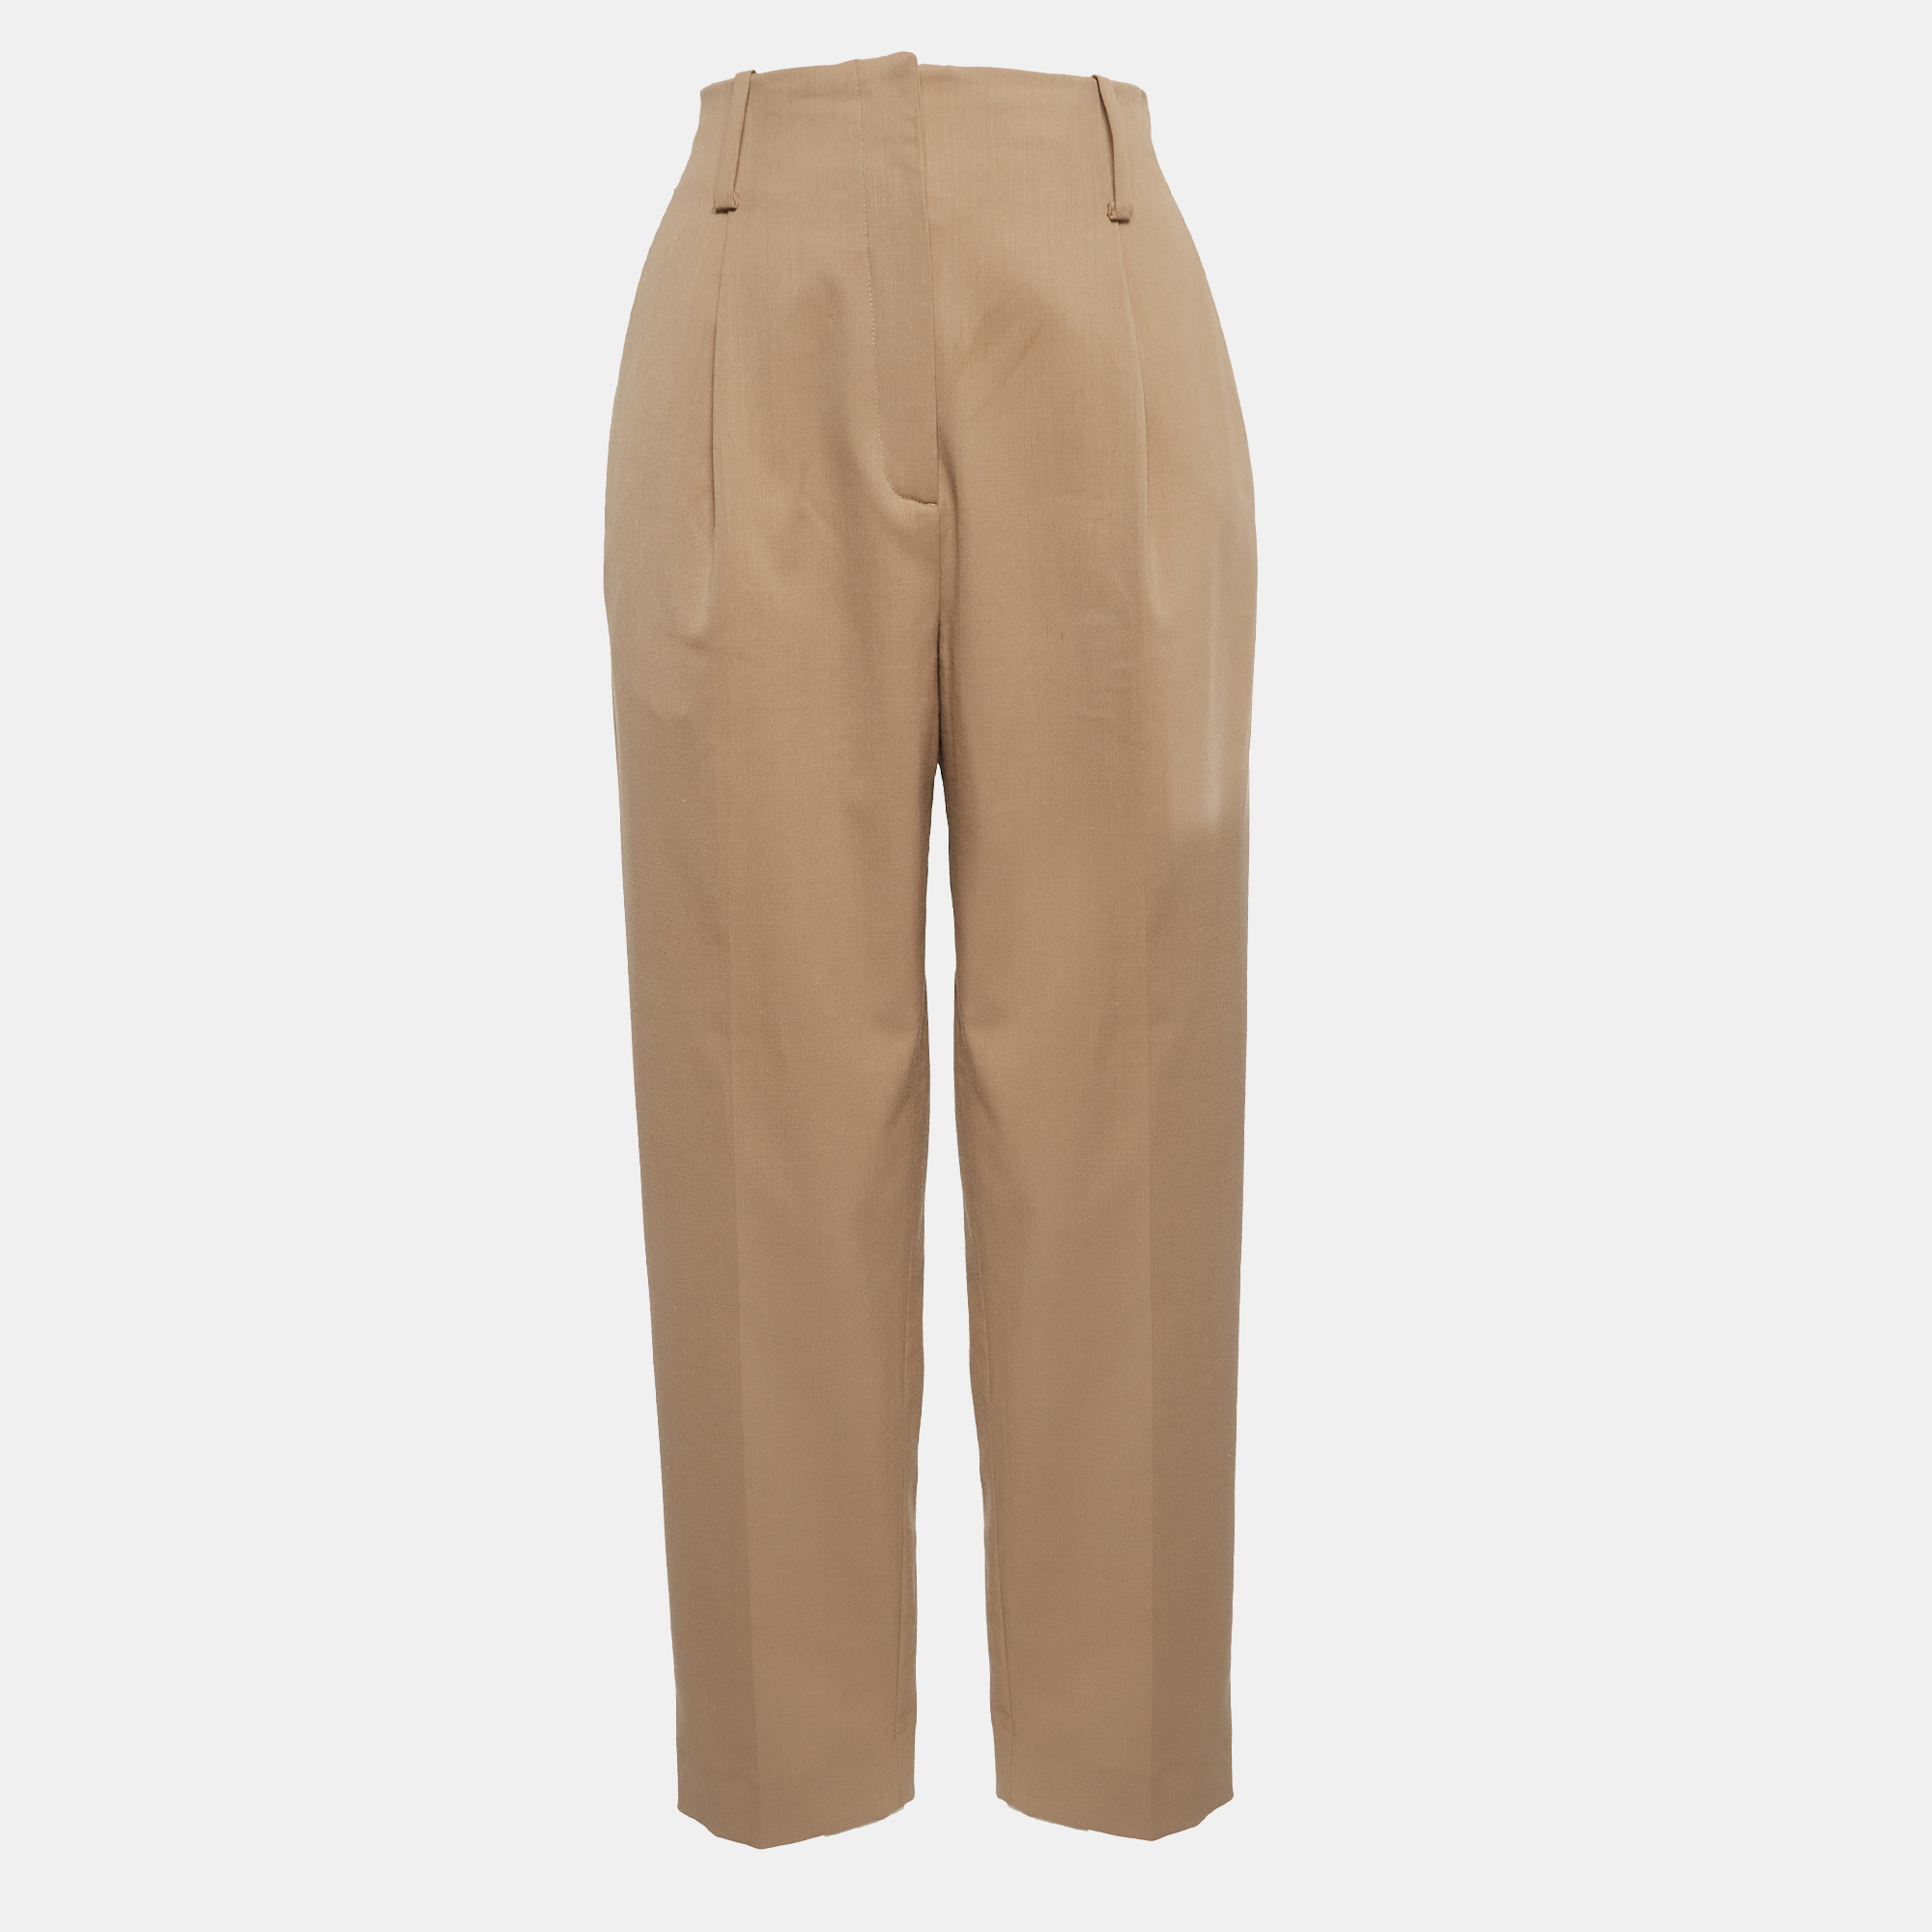 Sandro brown wool blend high-waist trousers s